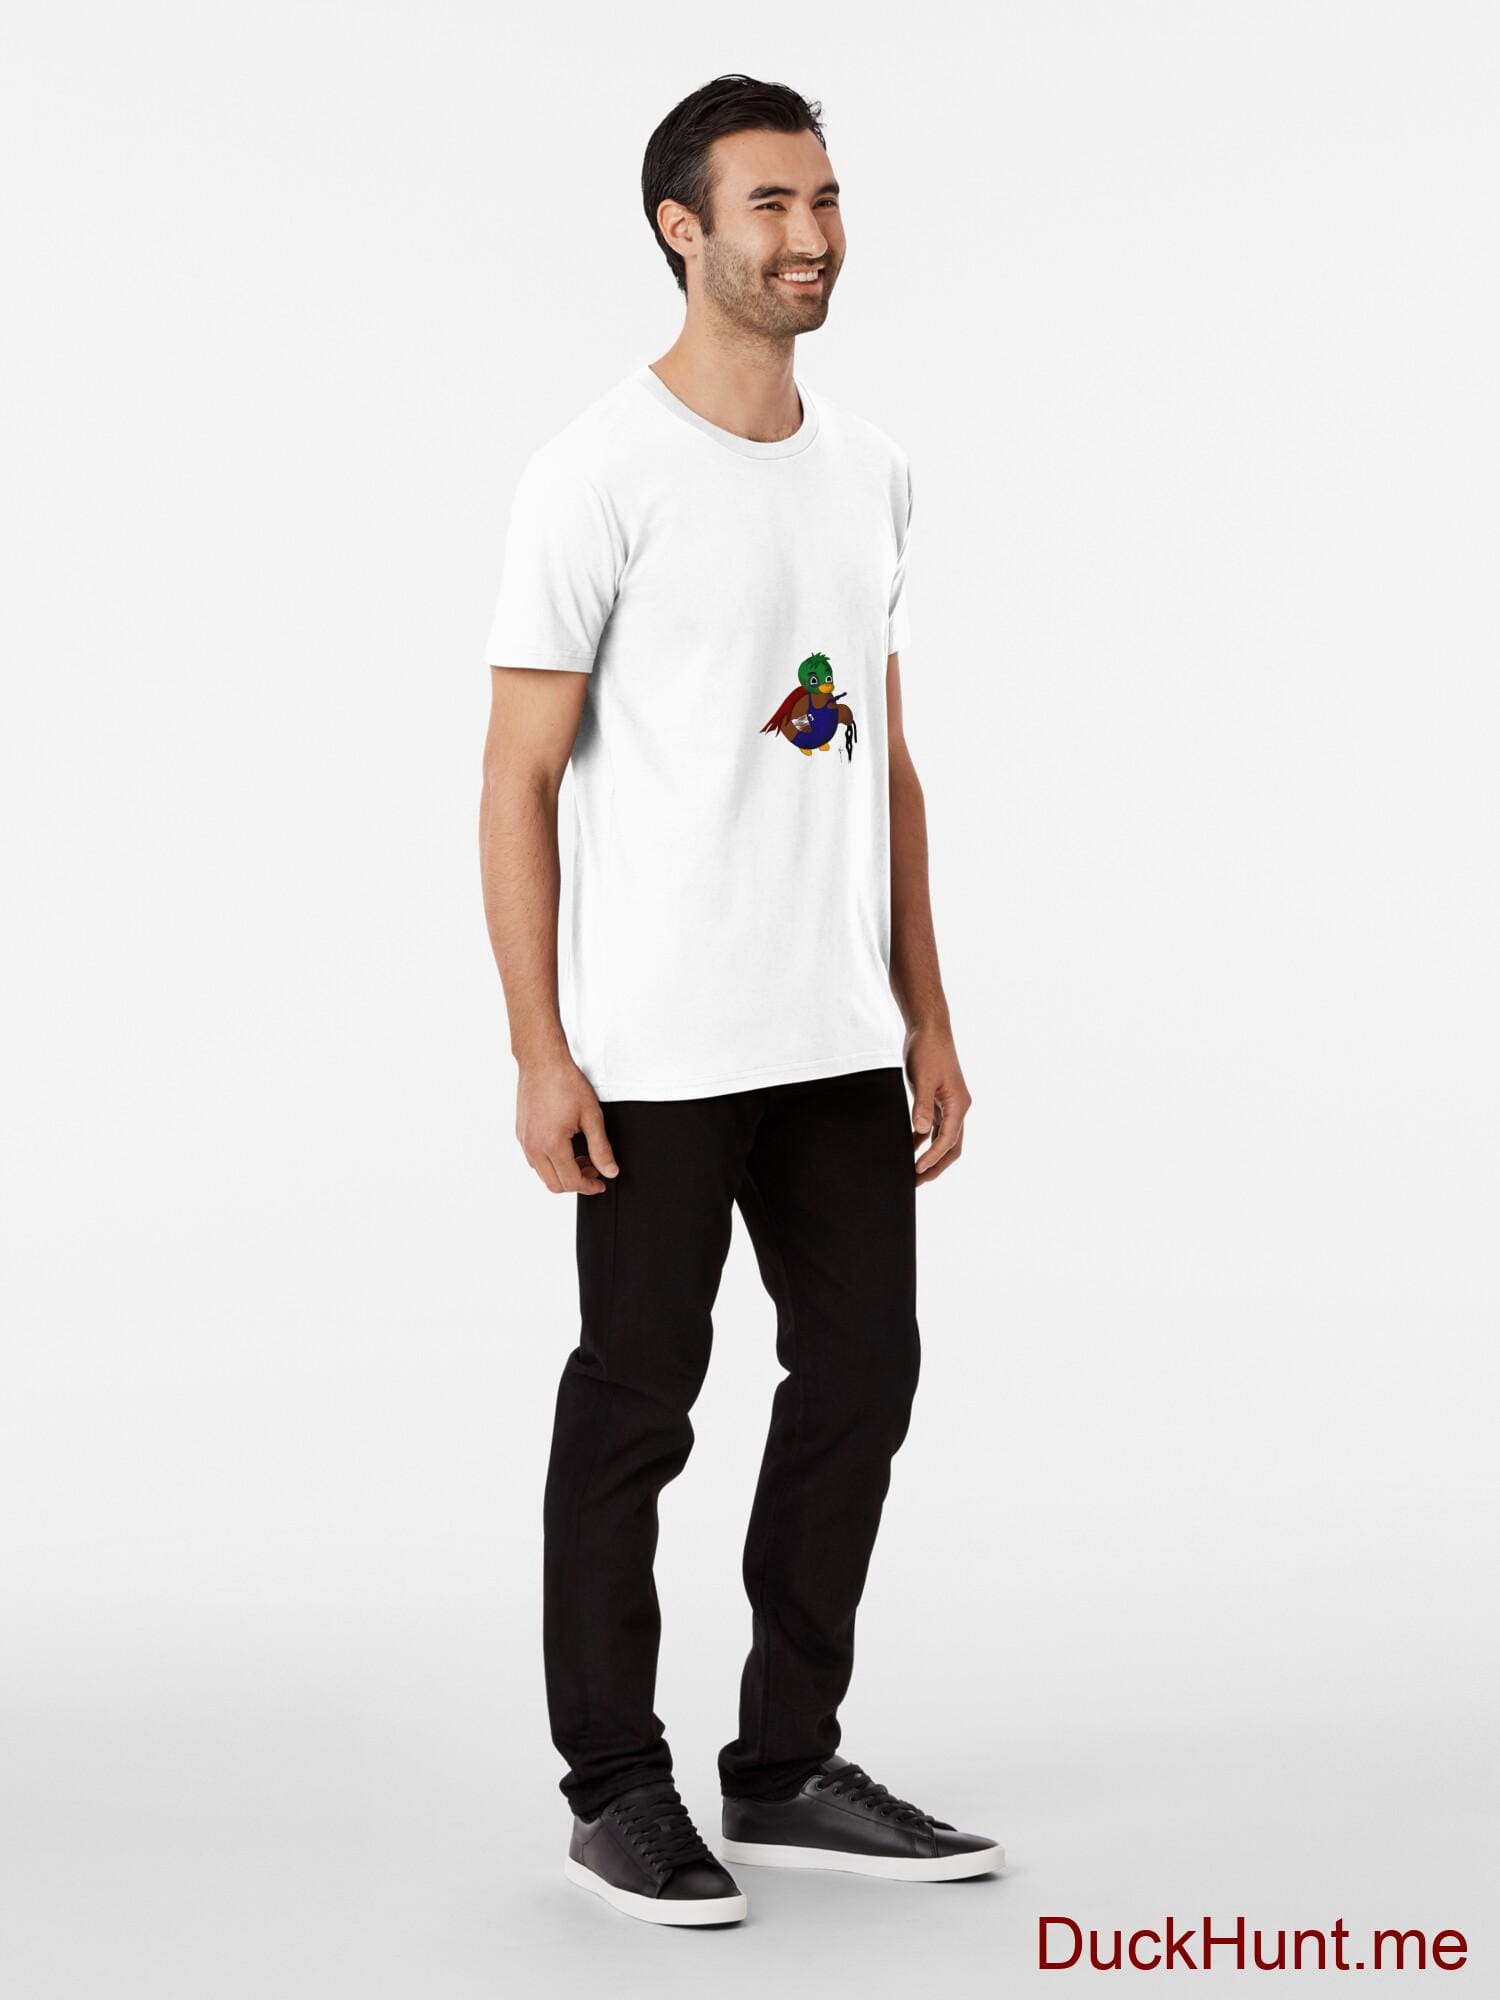 Dead DuckHunt Boss (smokeless) White Premium T-Shirt (Front printed) alternative image 2